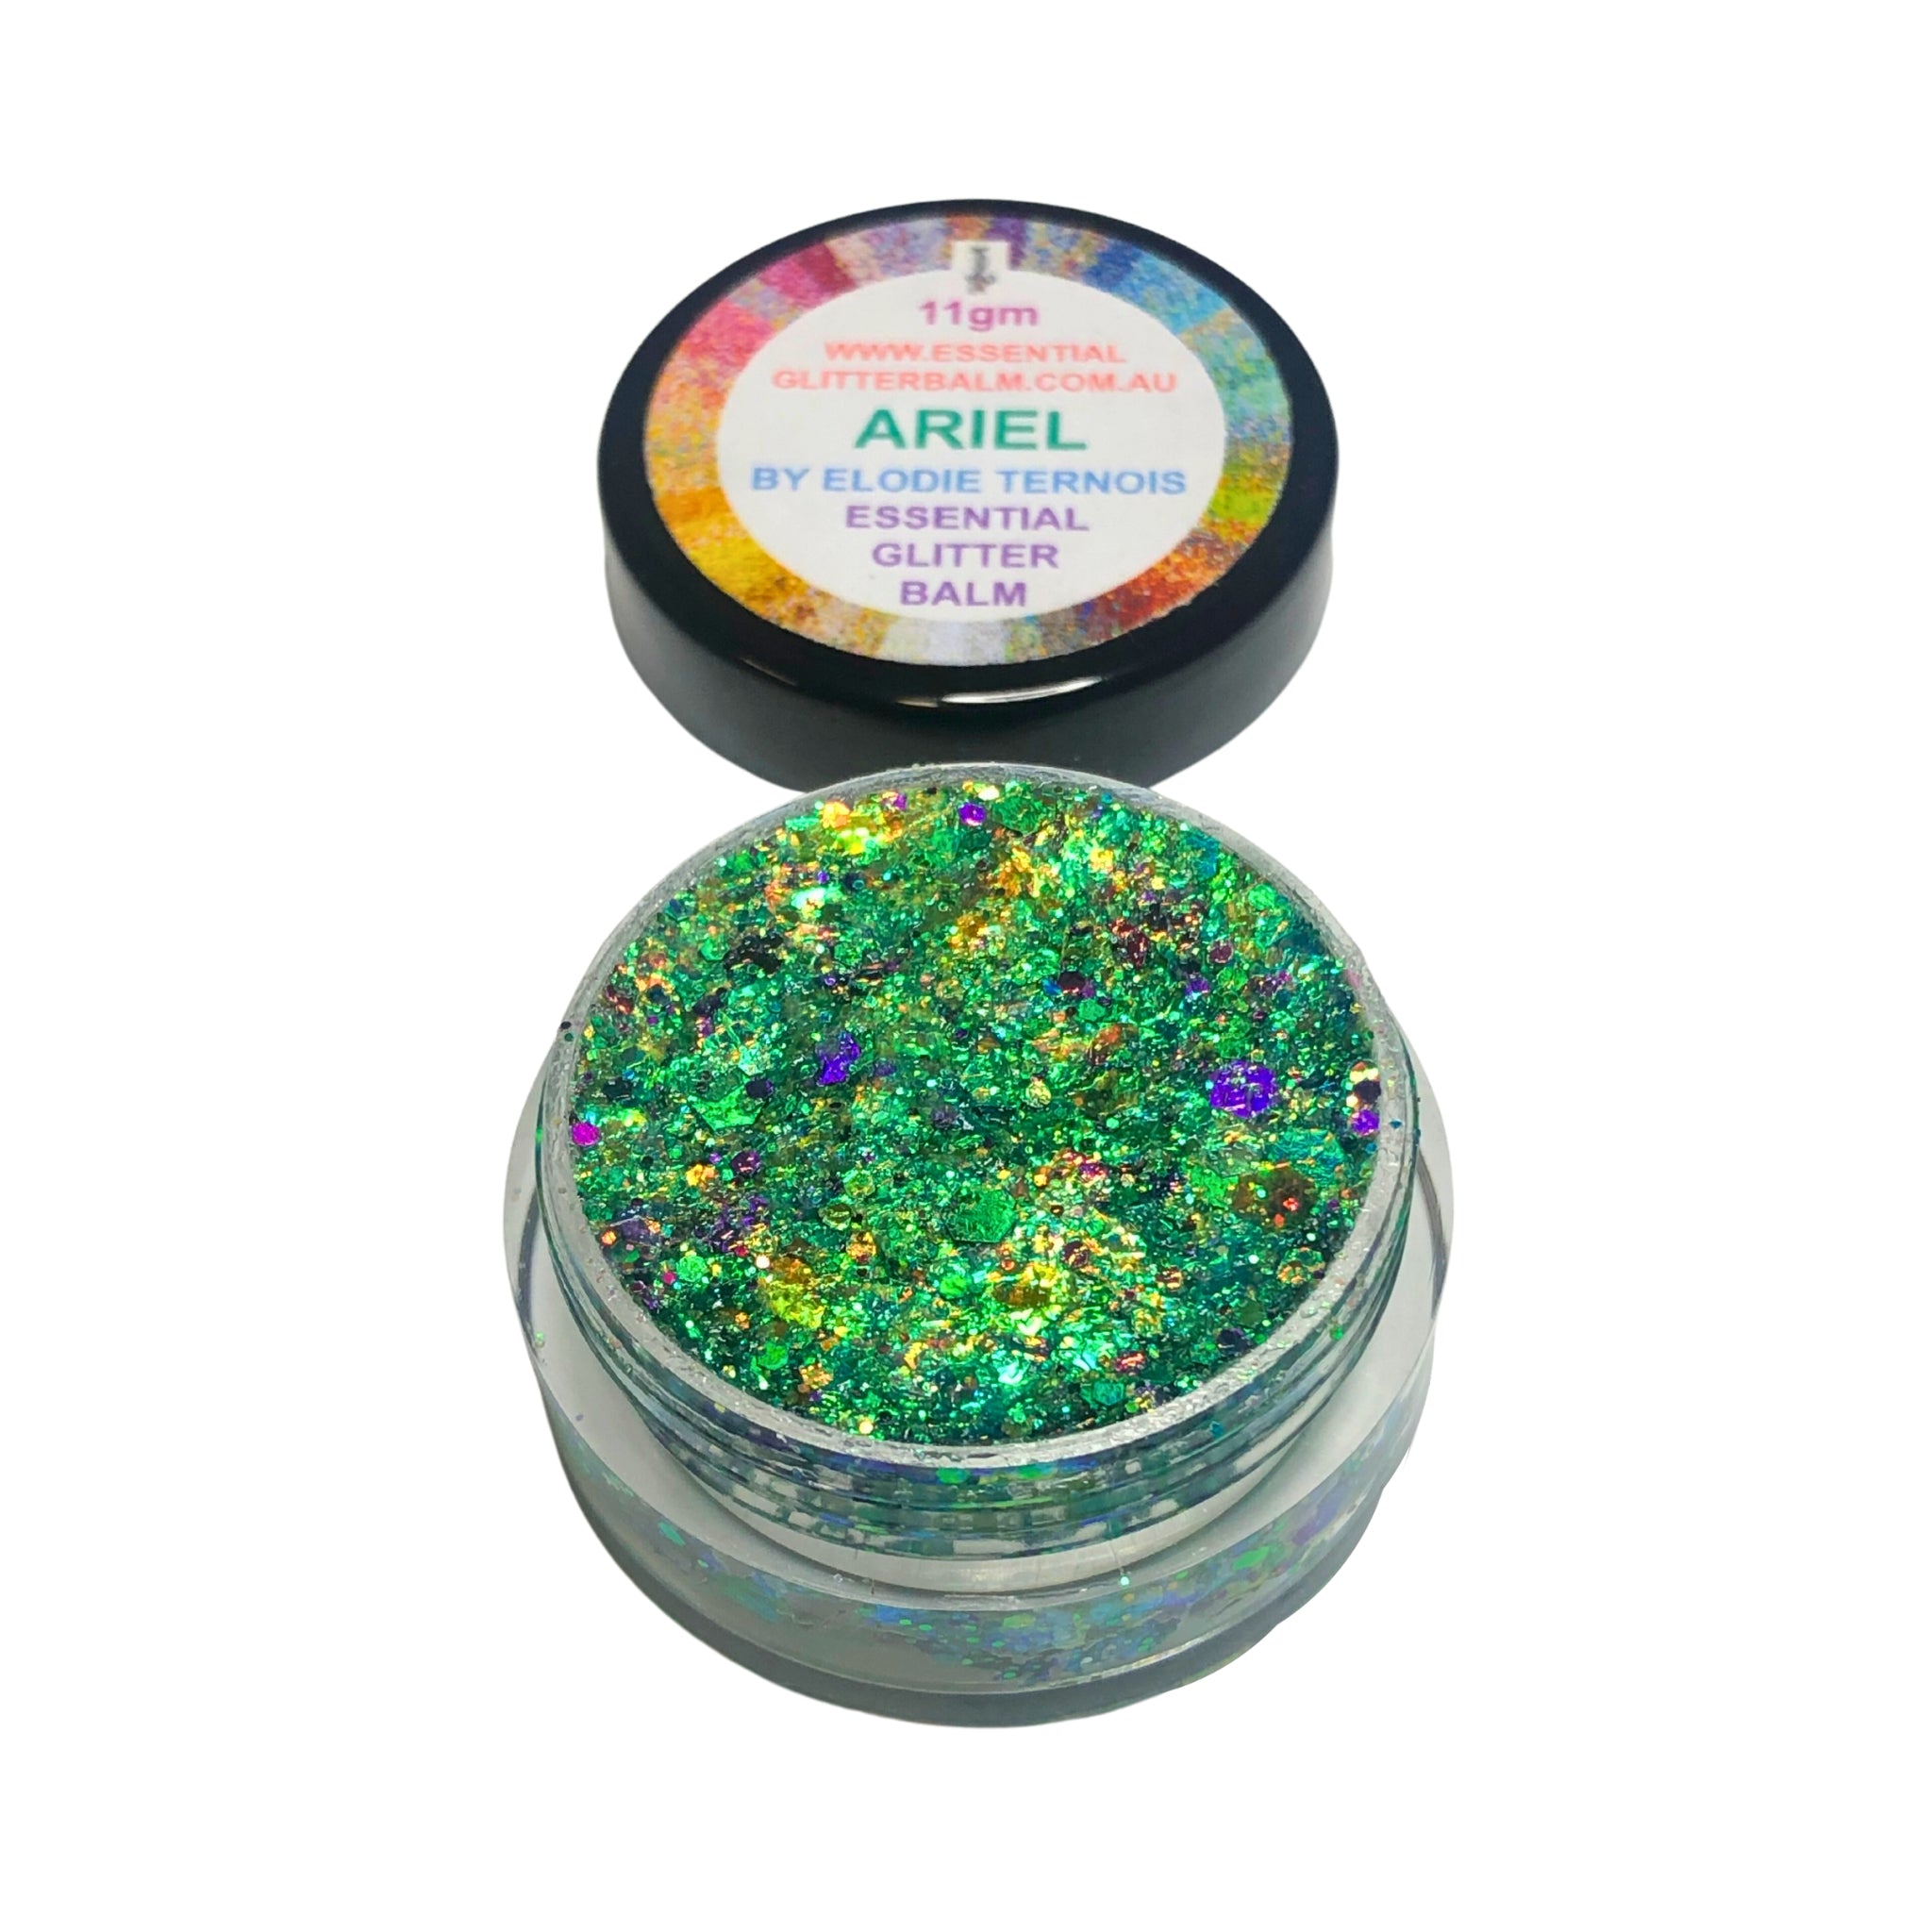 Essential Glitter Balm - ARIEL